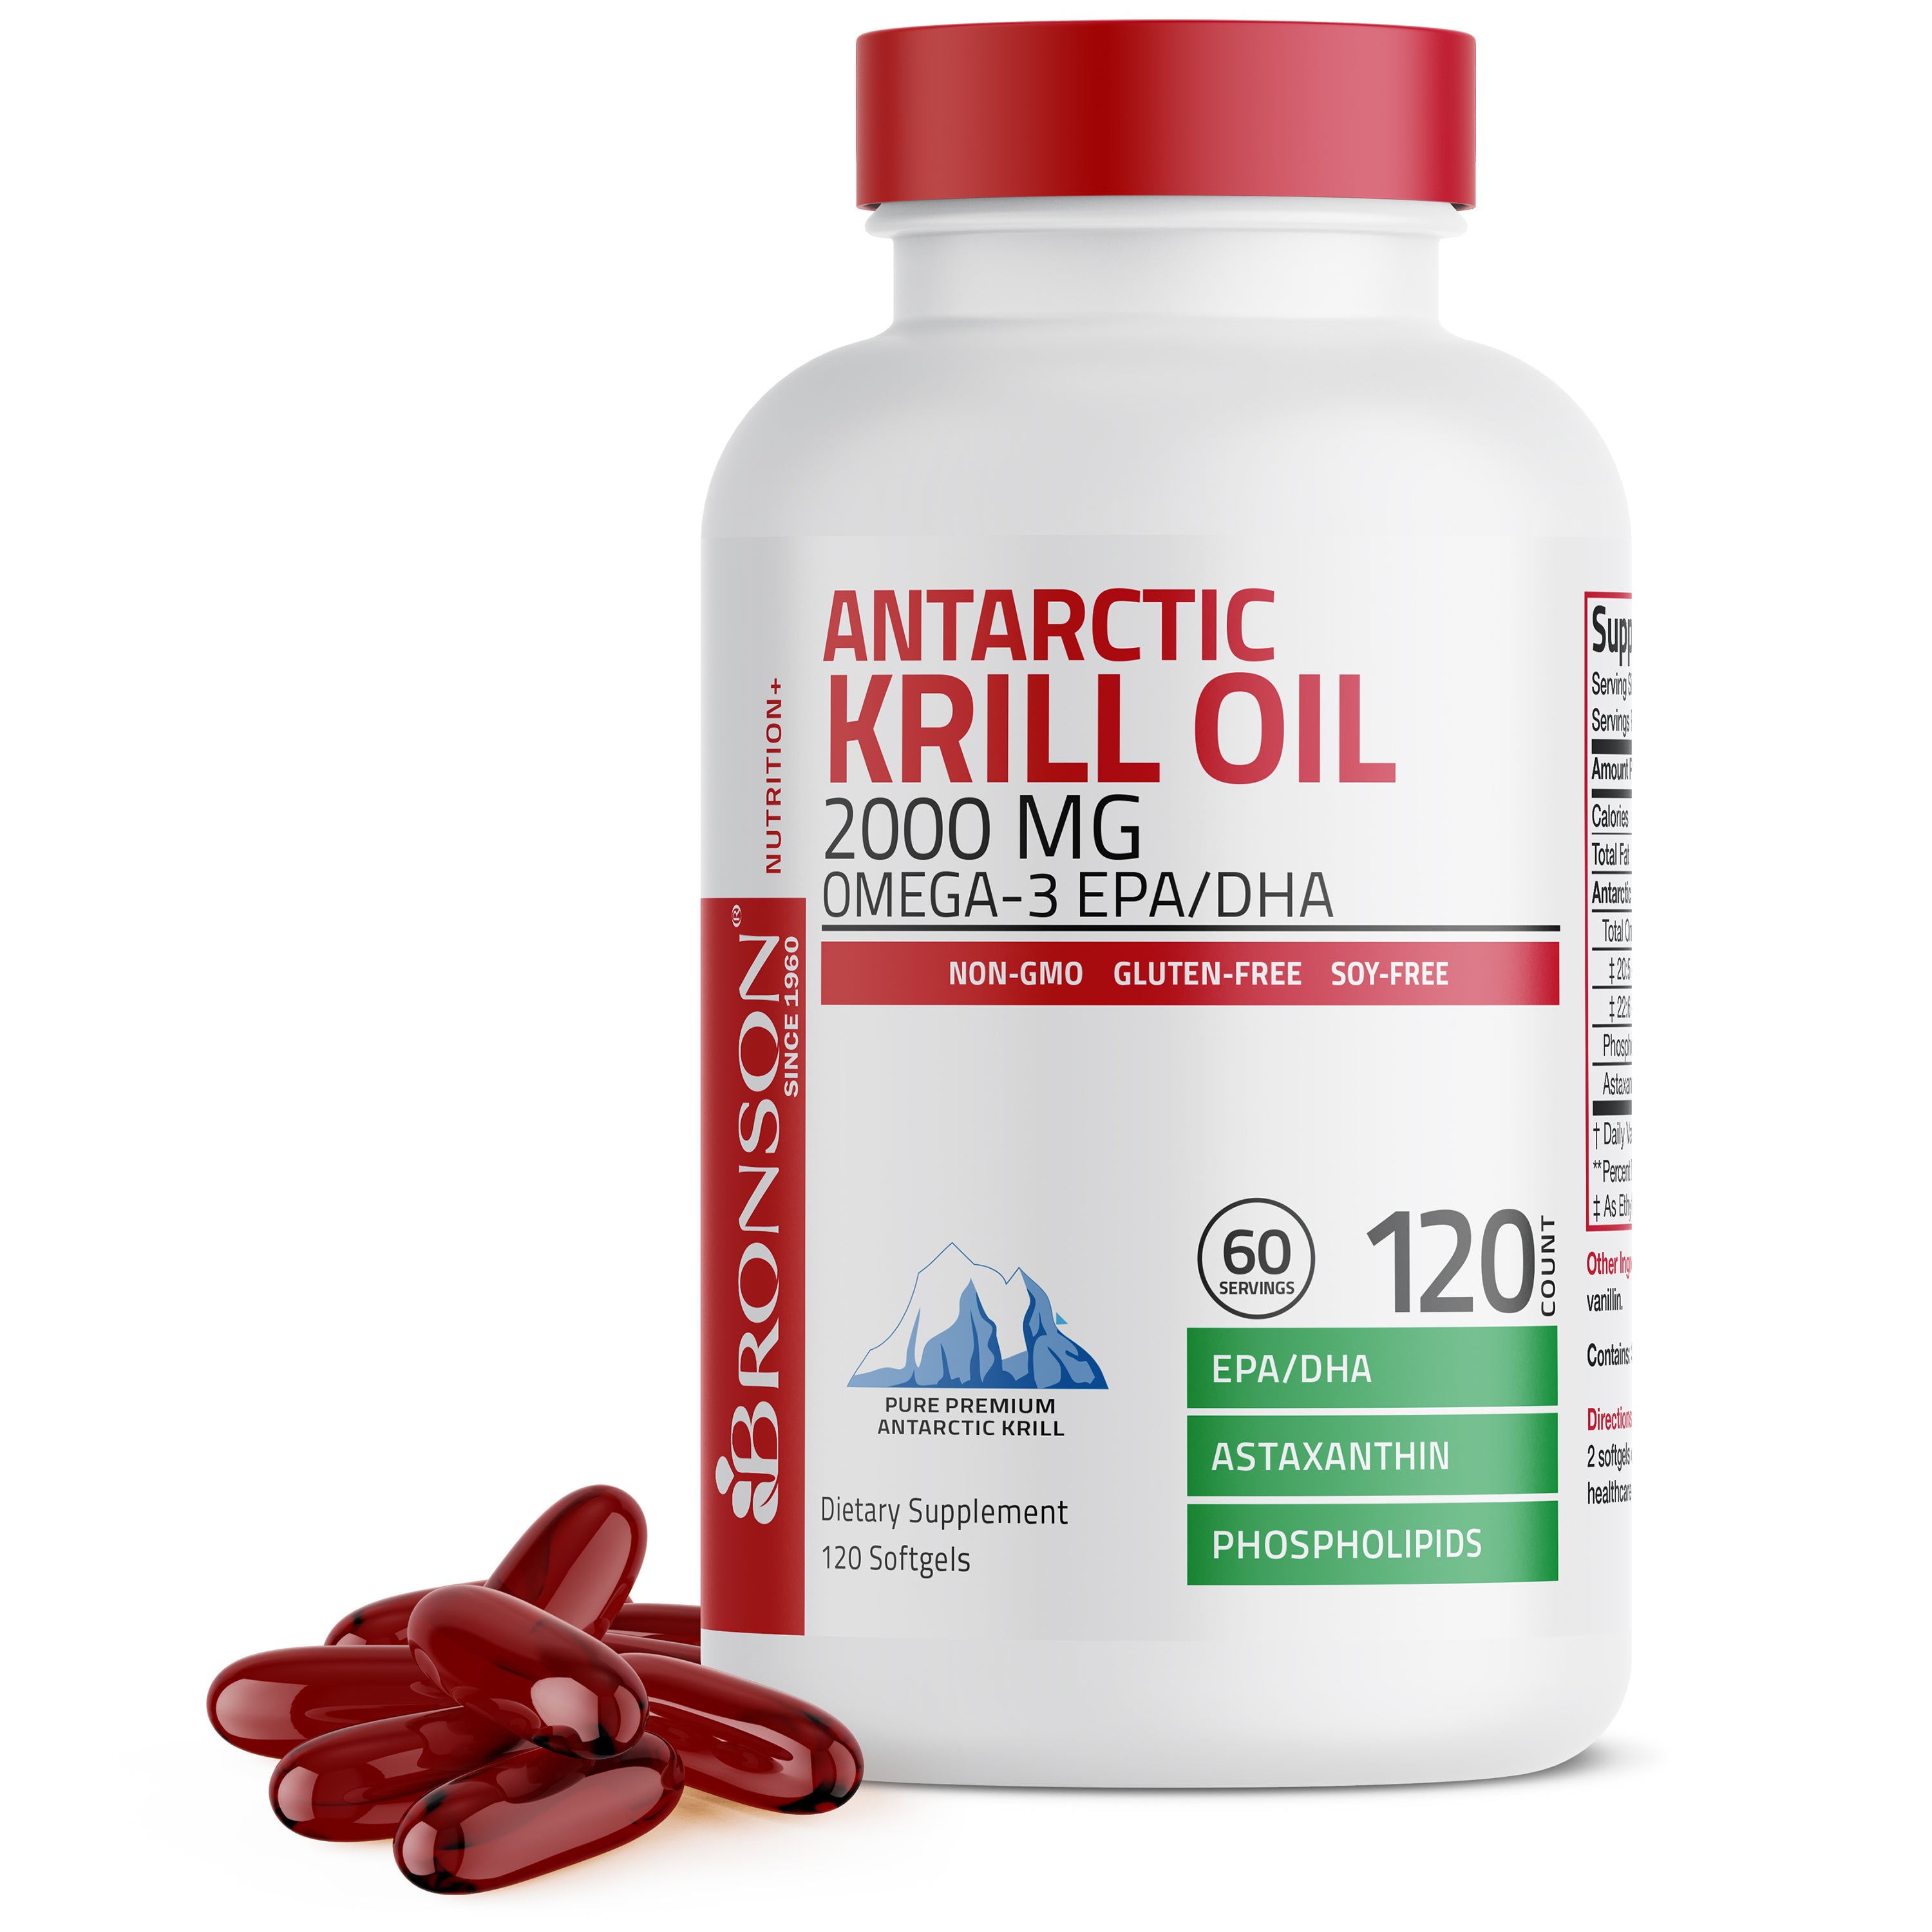 Antarctic Krill Oil Omega-3 EPA DHA Non-GMO - 2,000 mg view 3 of 6